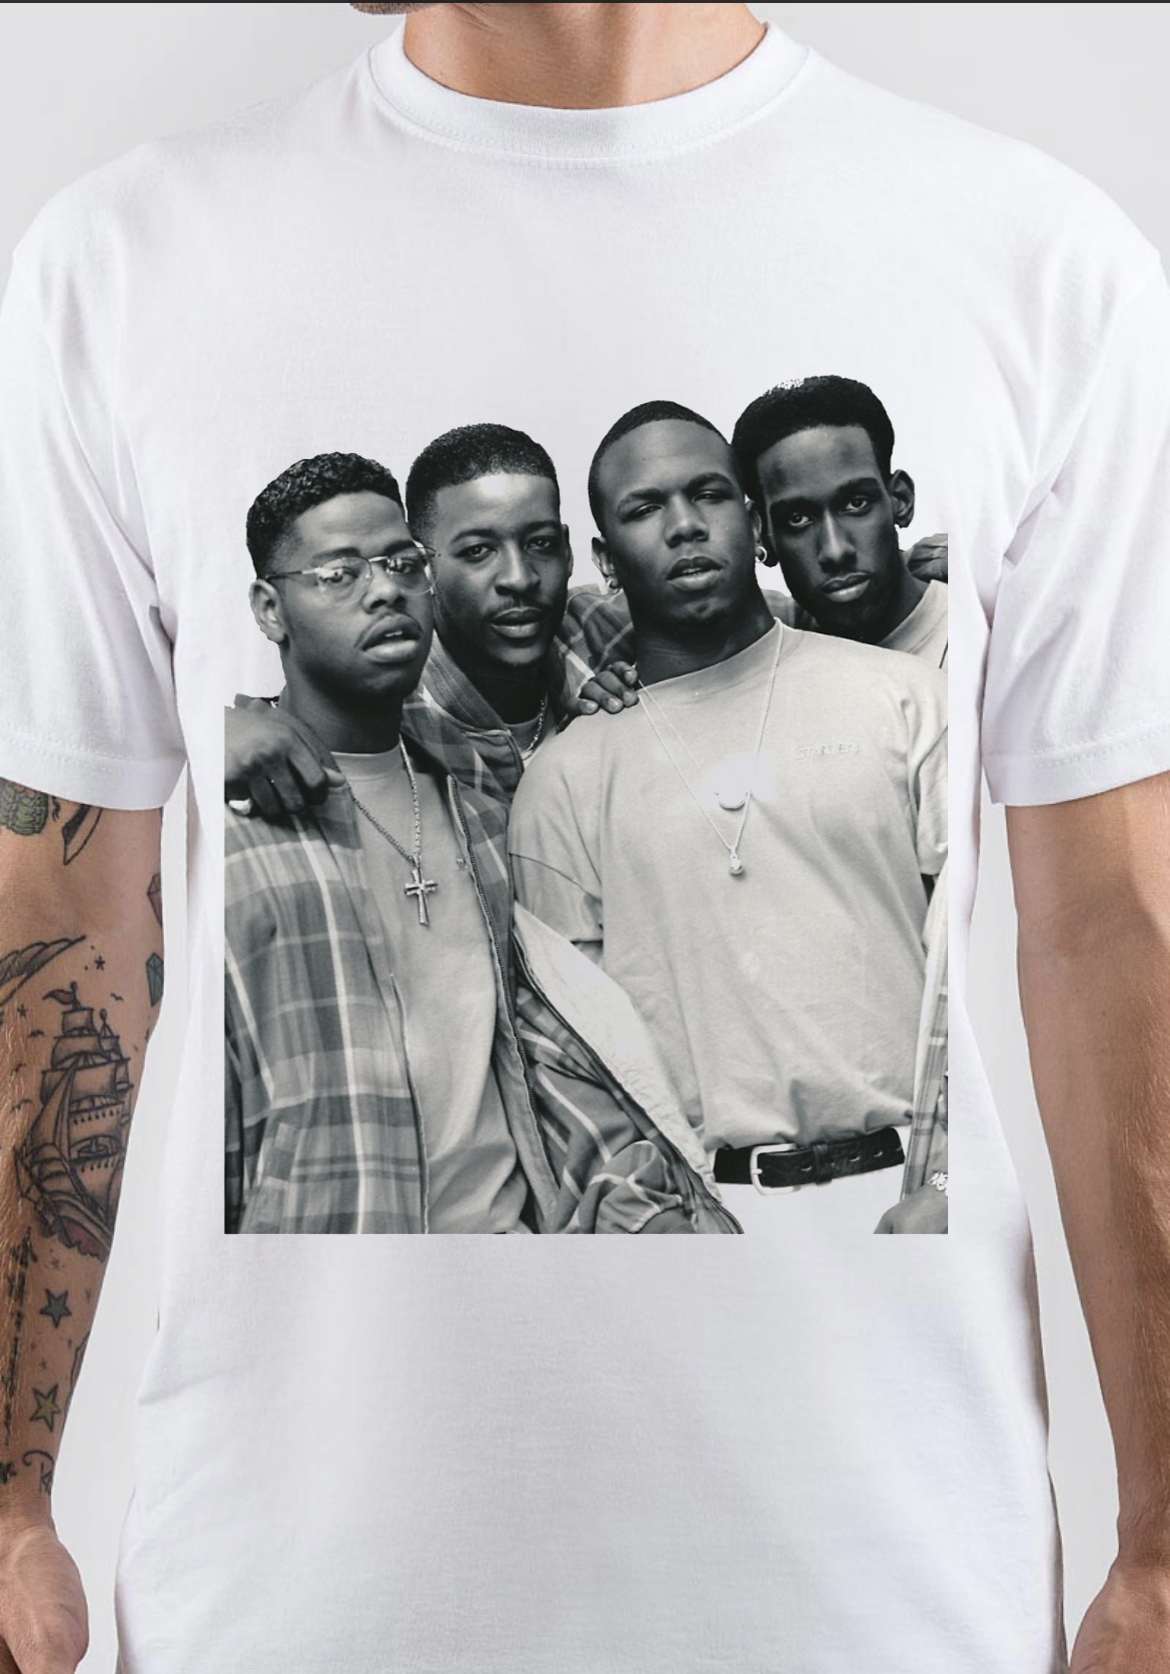 Boyz II Men T-Shirt And Merchandise